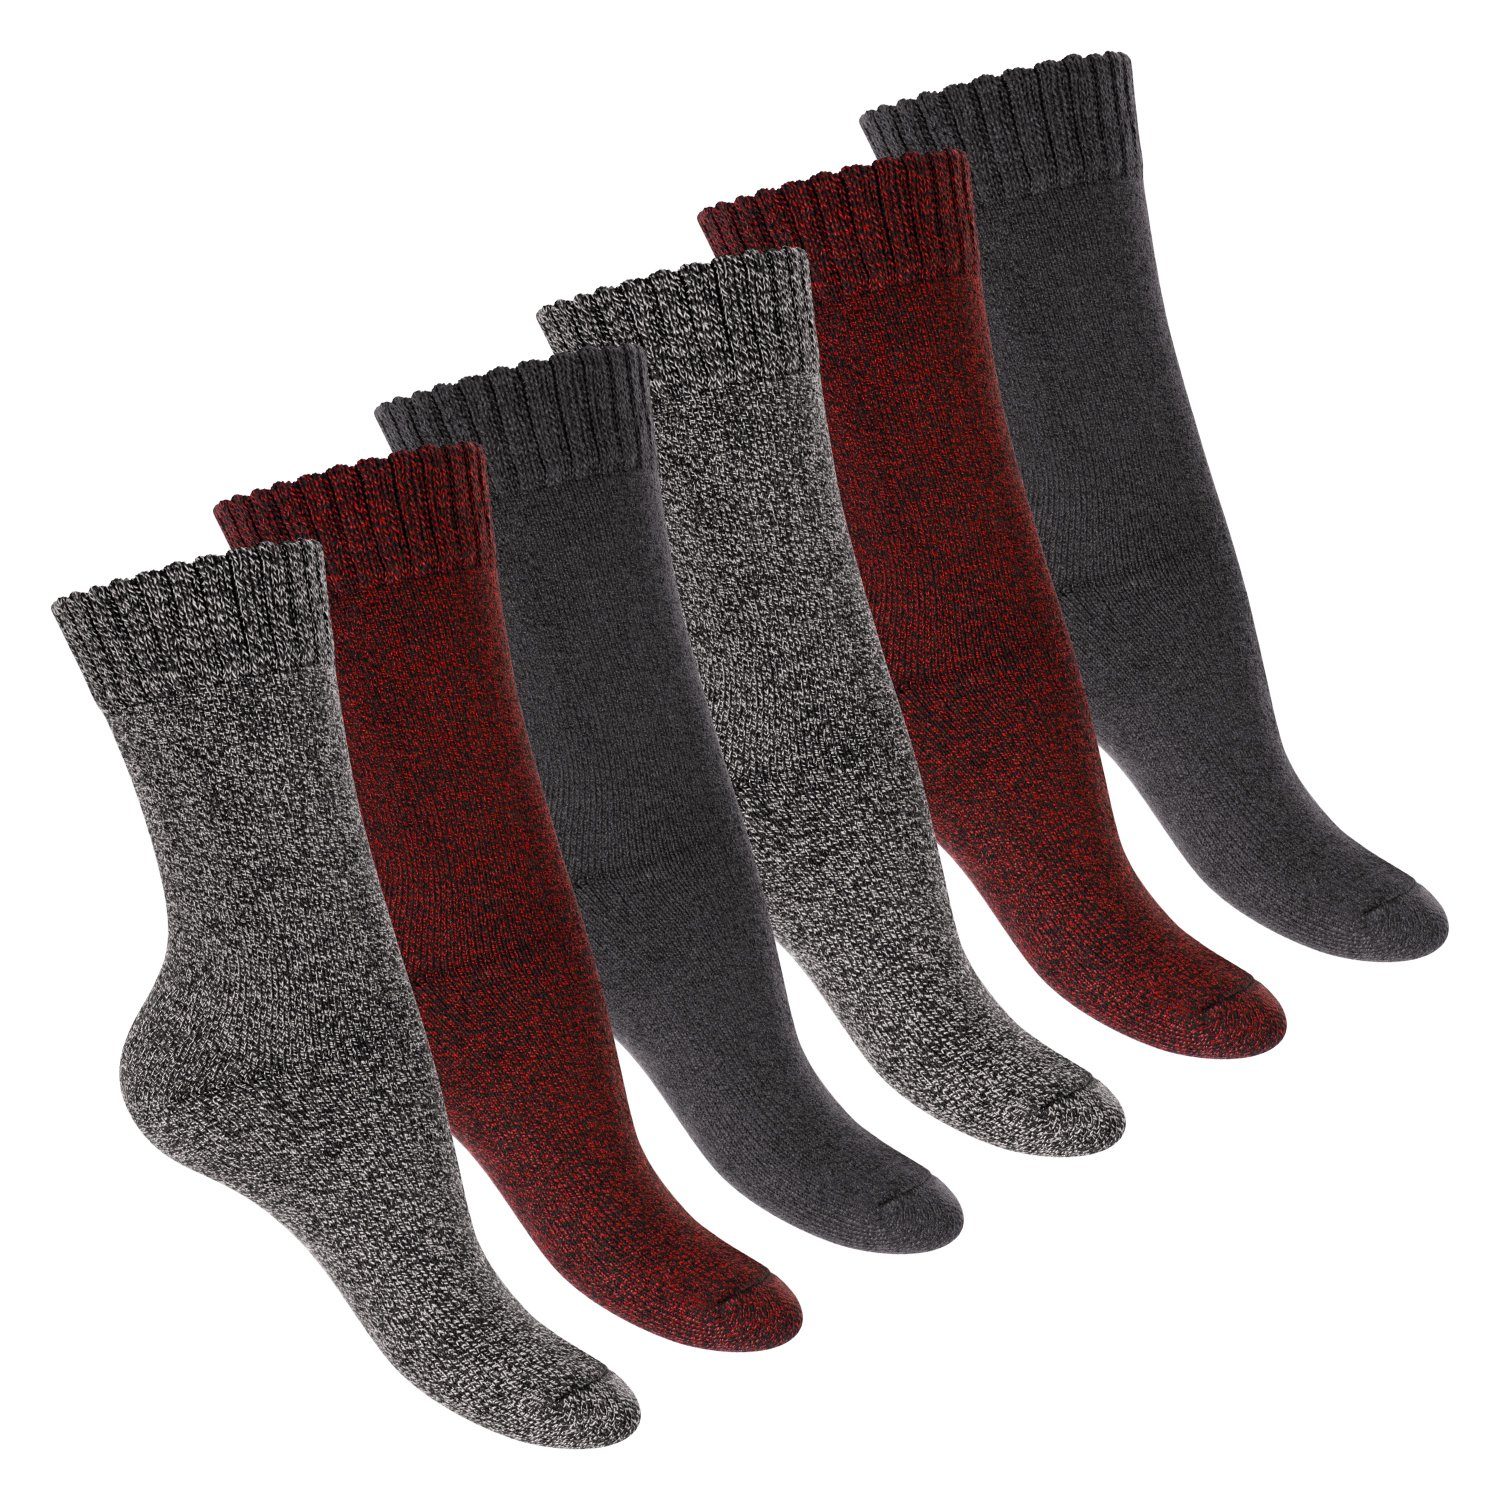 Footstar Thermosocken Damen Frottee Socken (6 Paar) Winter Socken mit Thermo Effekt Grau/Rot | Thermosocken